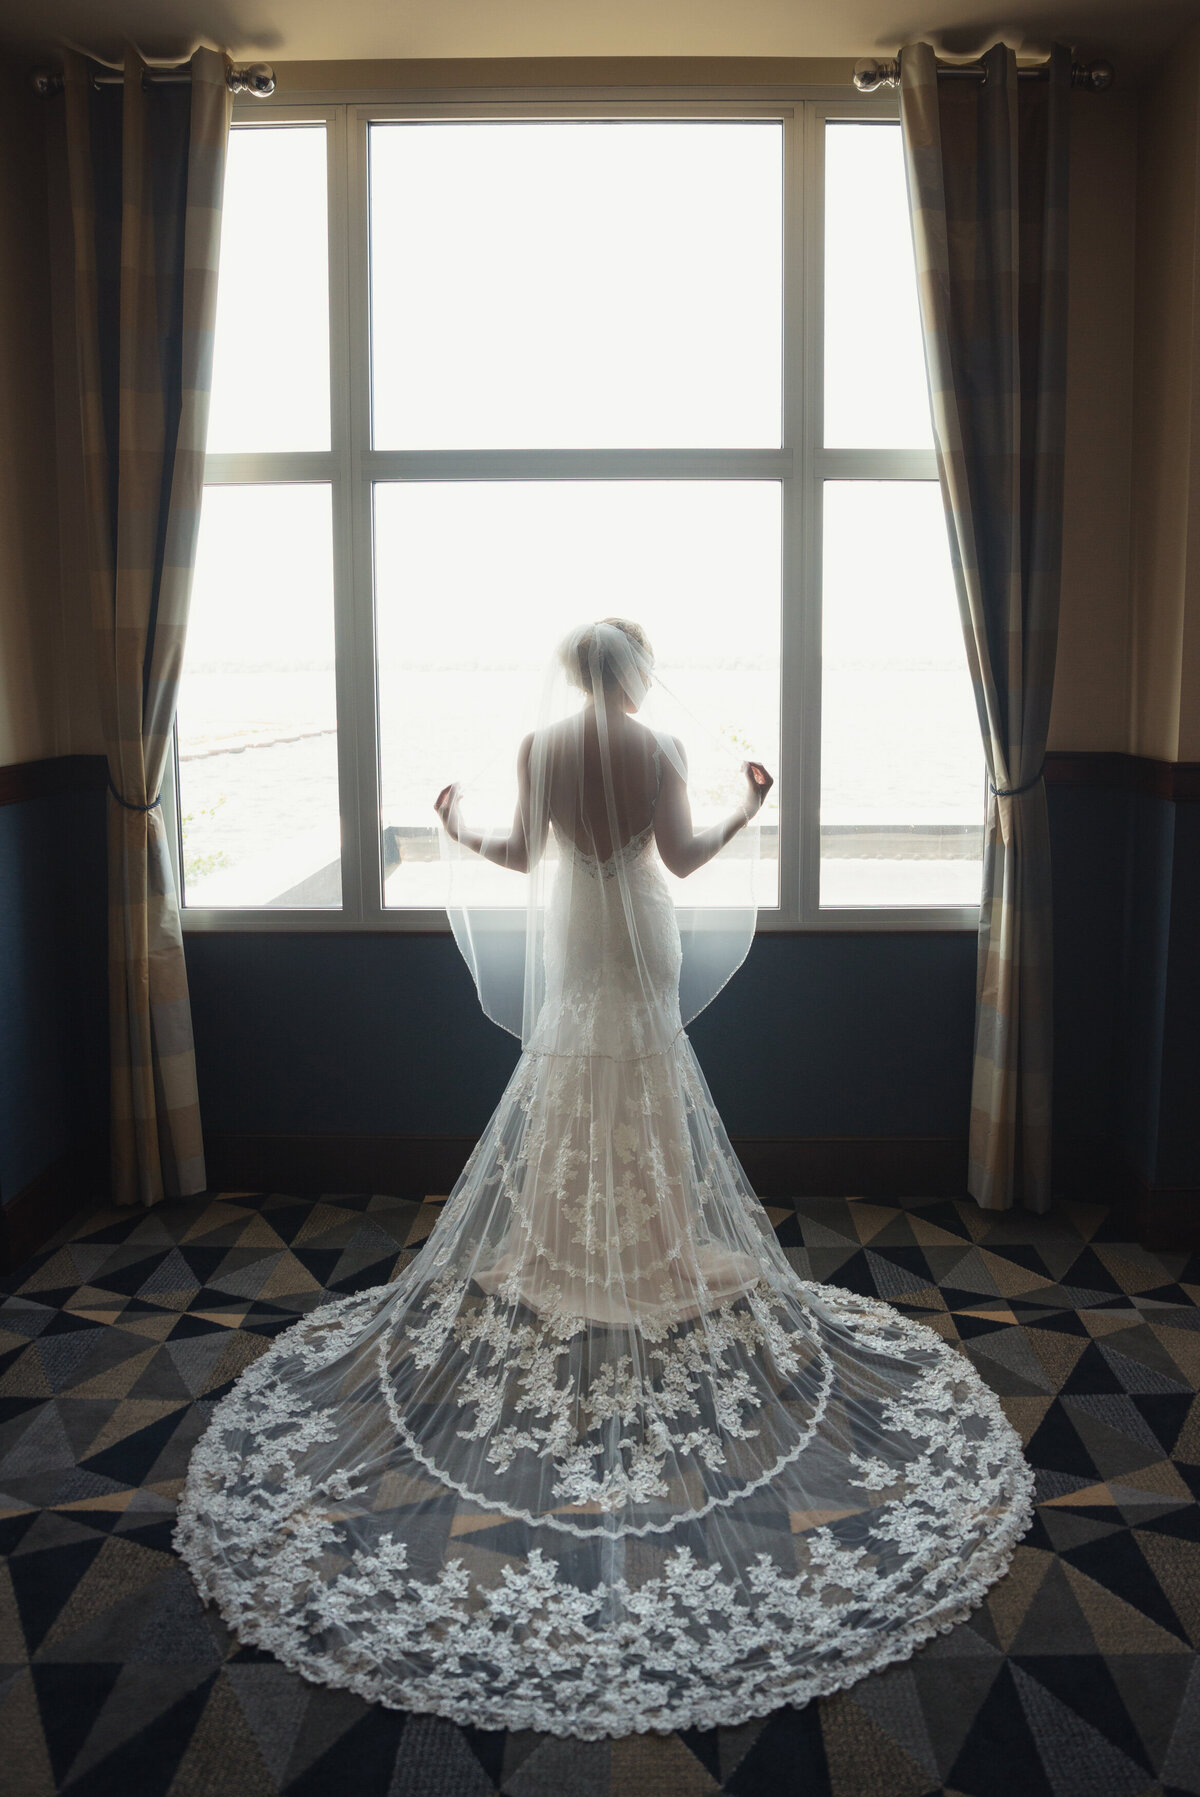 Bride in front of window showing wedding dress.